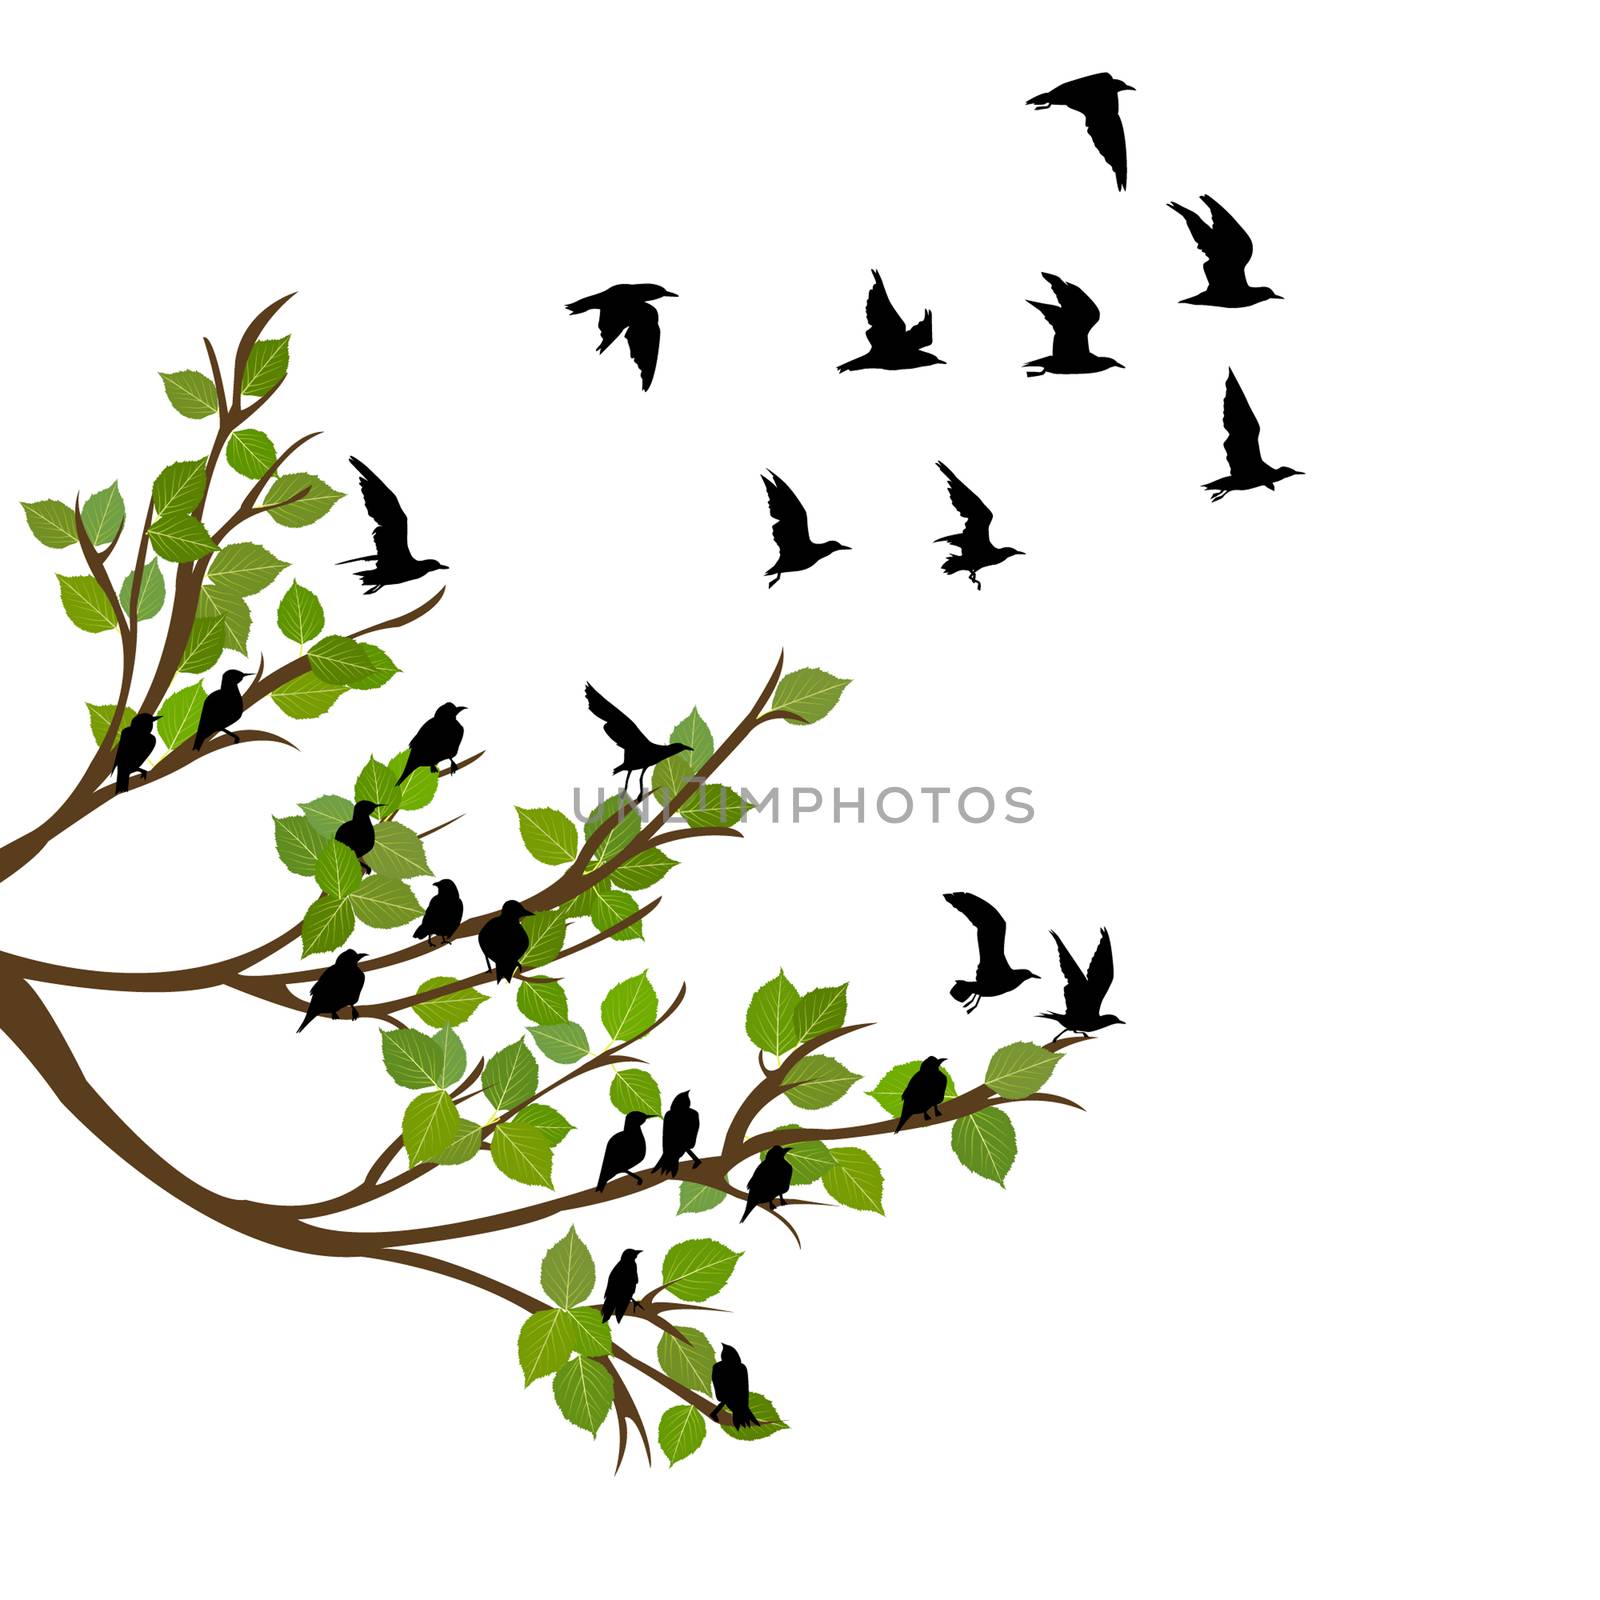 Flock of flying birds on tree branch by hibrida13